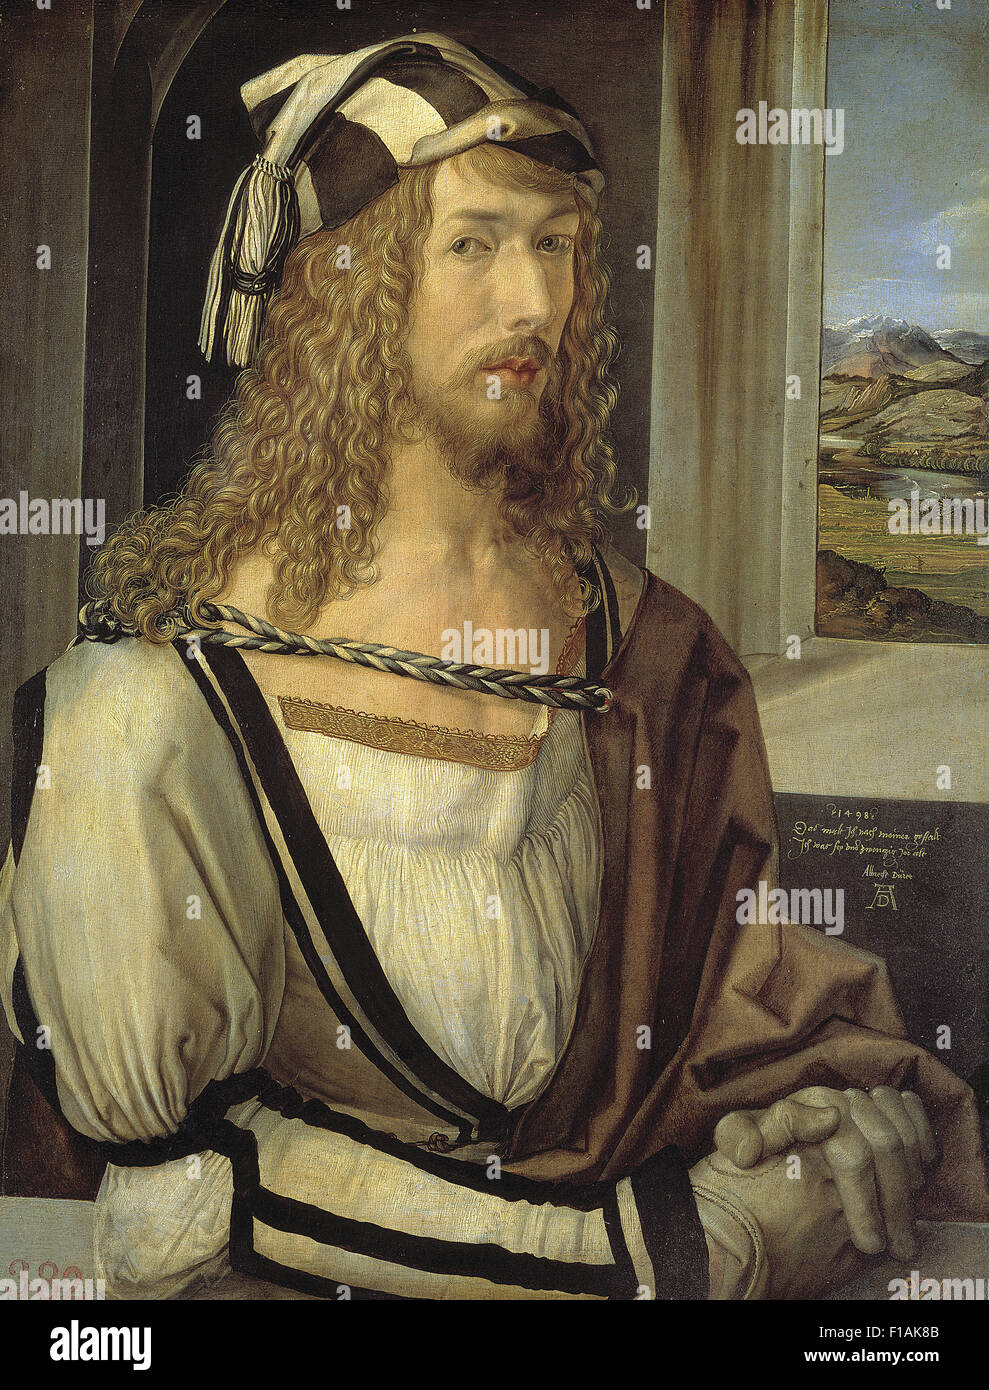 Albrecht Dürer - Self-portrait Stock Photo